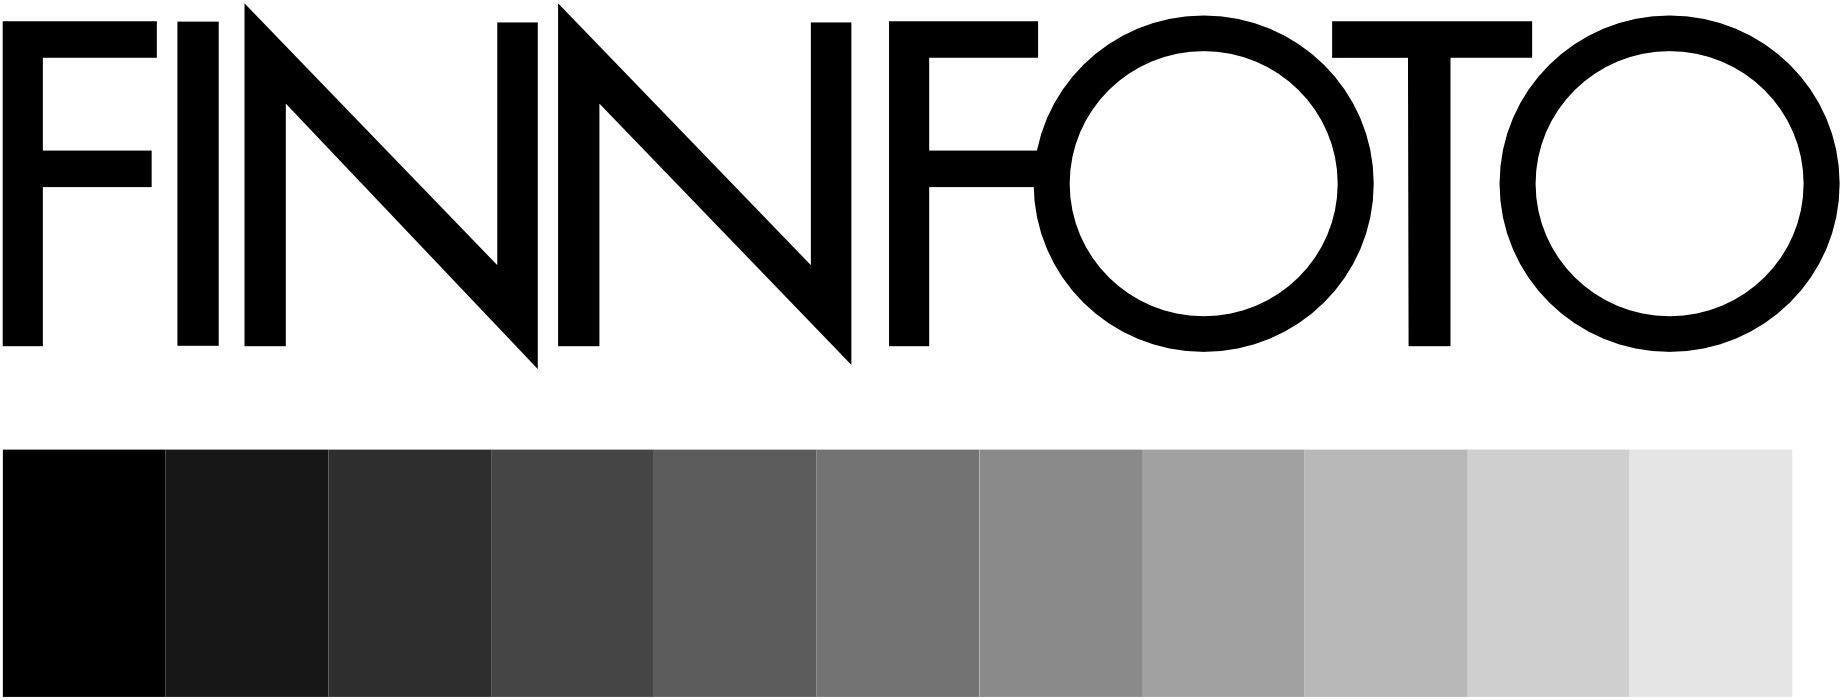 Finnfoto logo